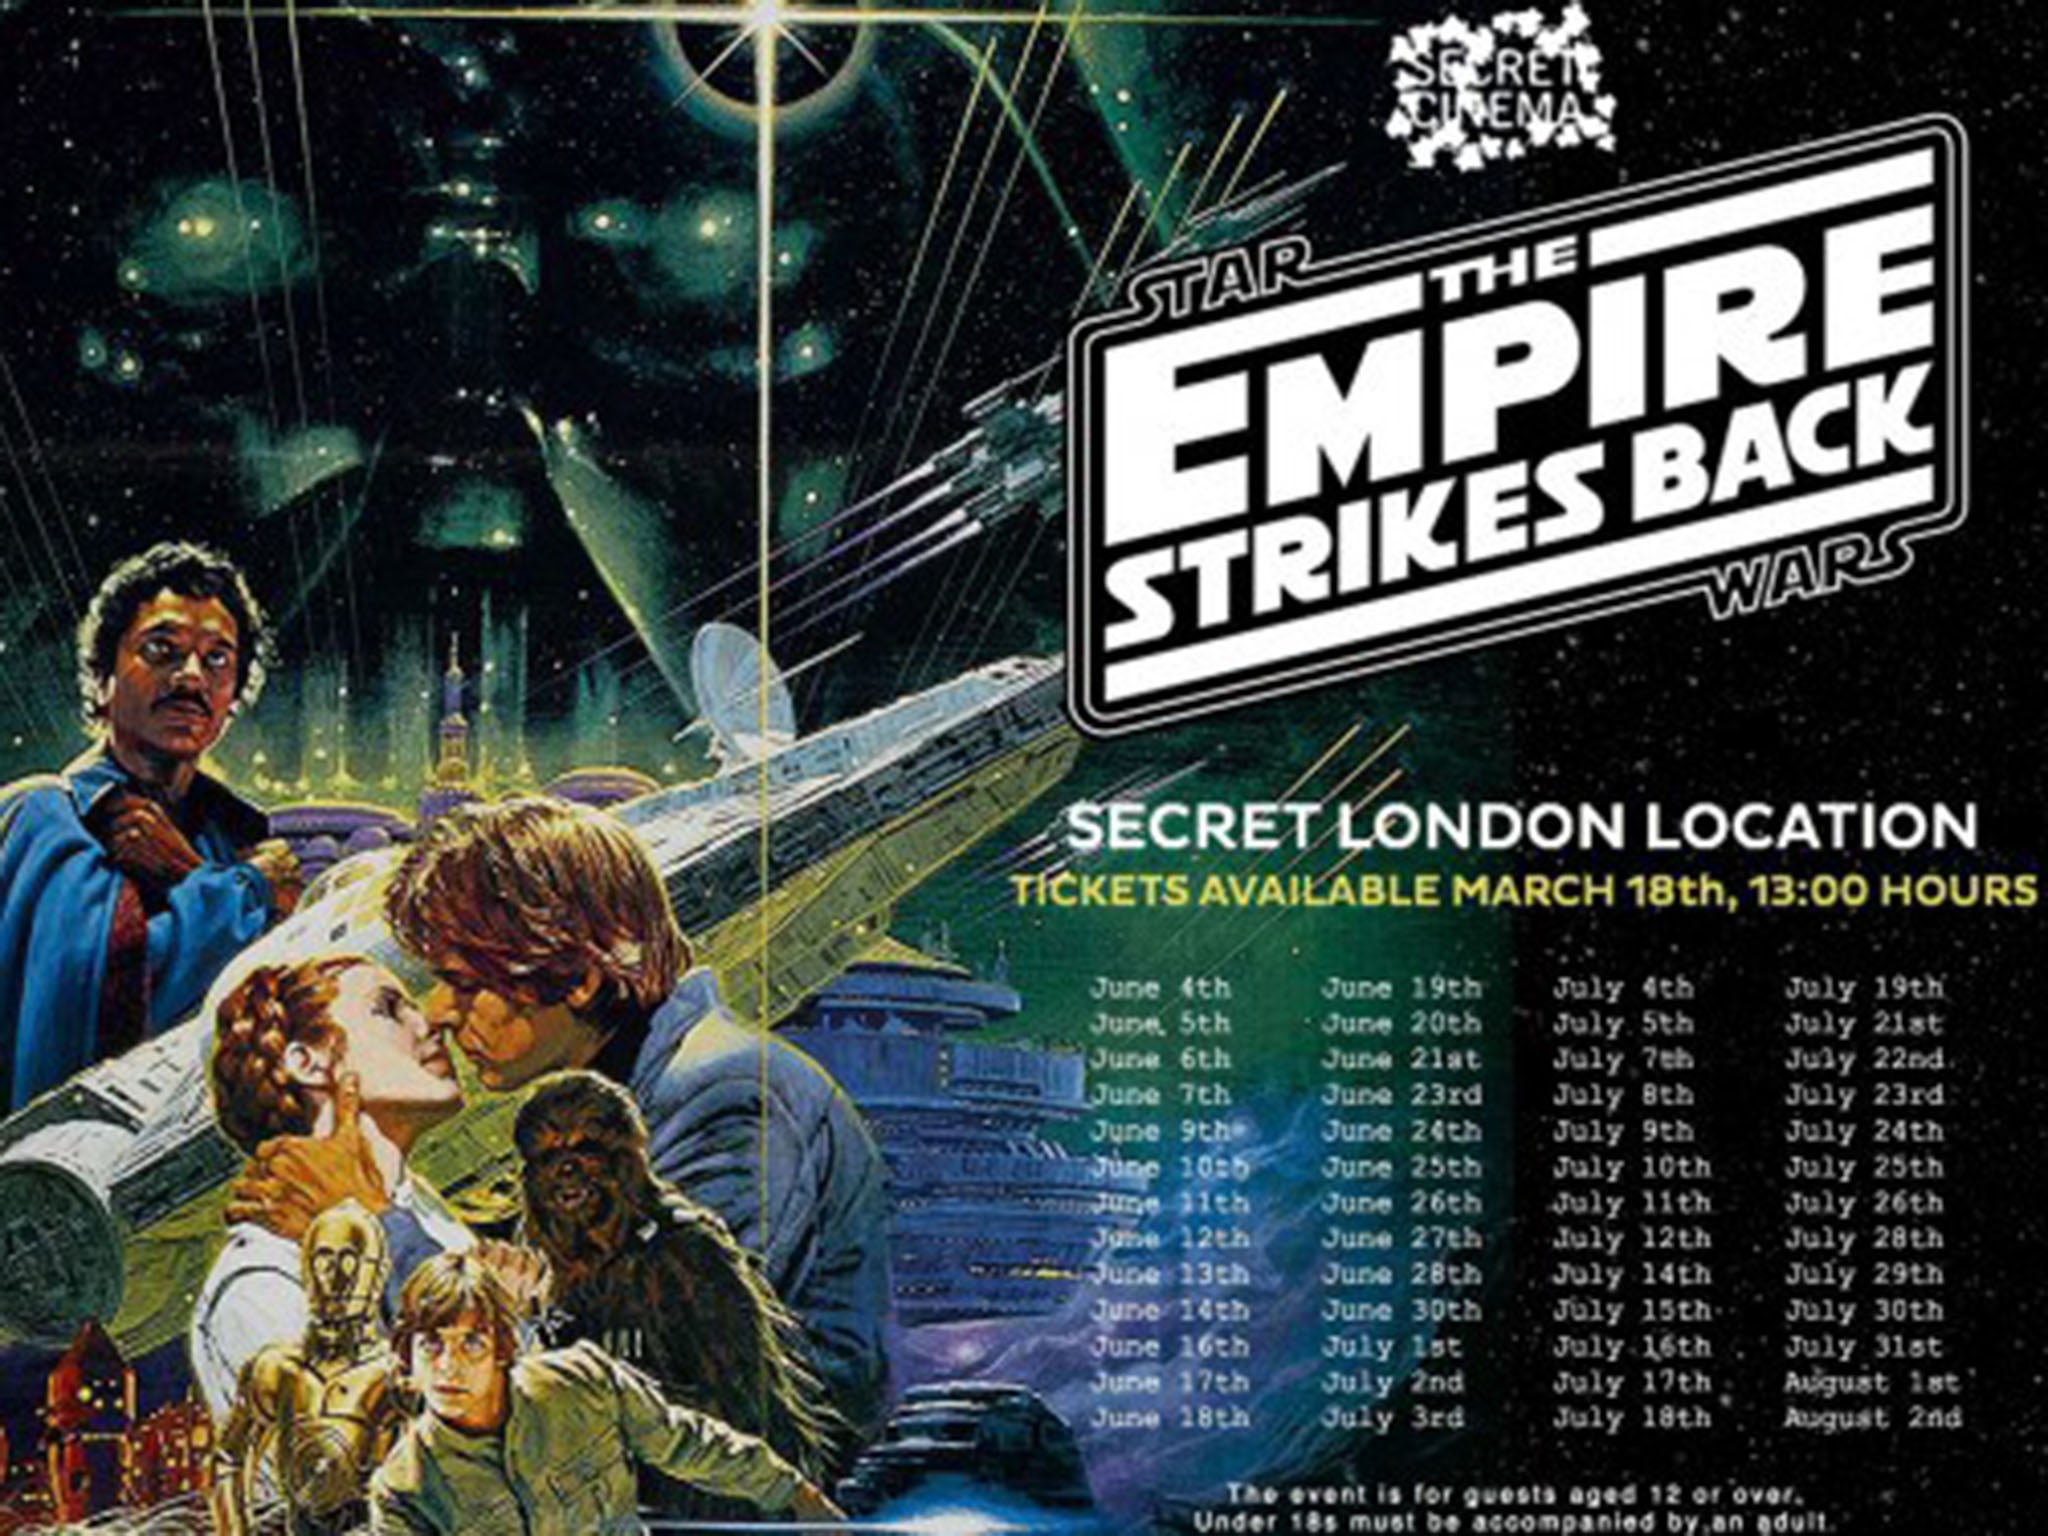 Secret Cinema will screen Star Wars: The Empire Strikes Back this summer